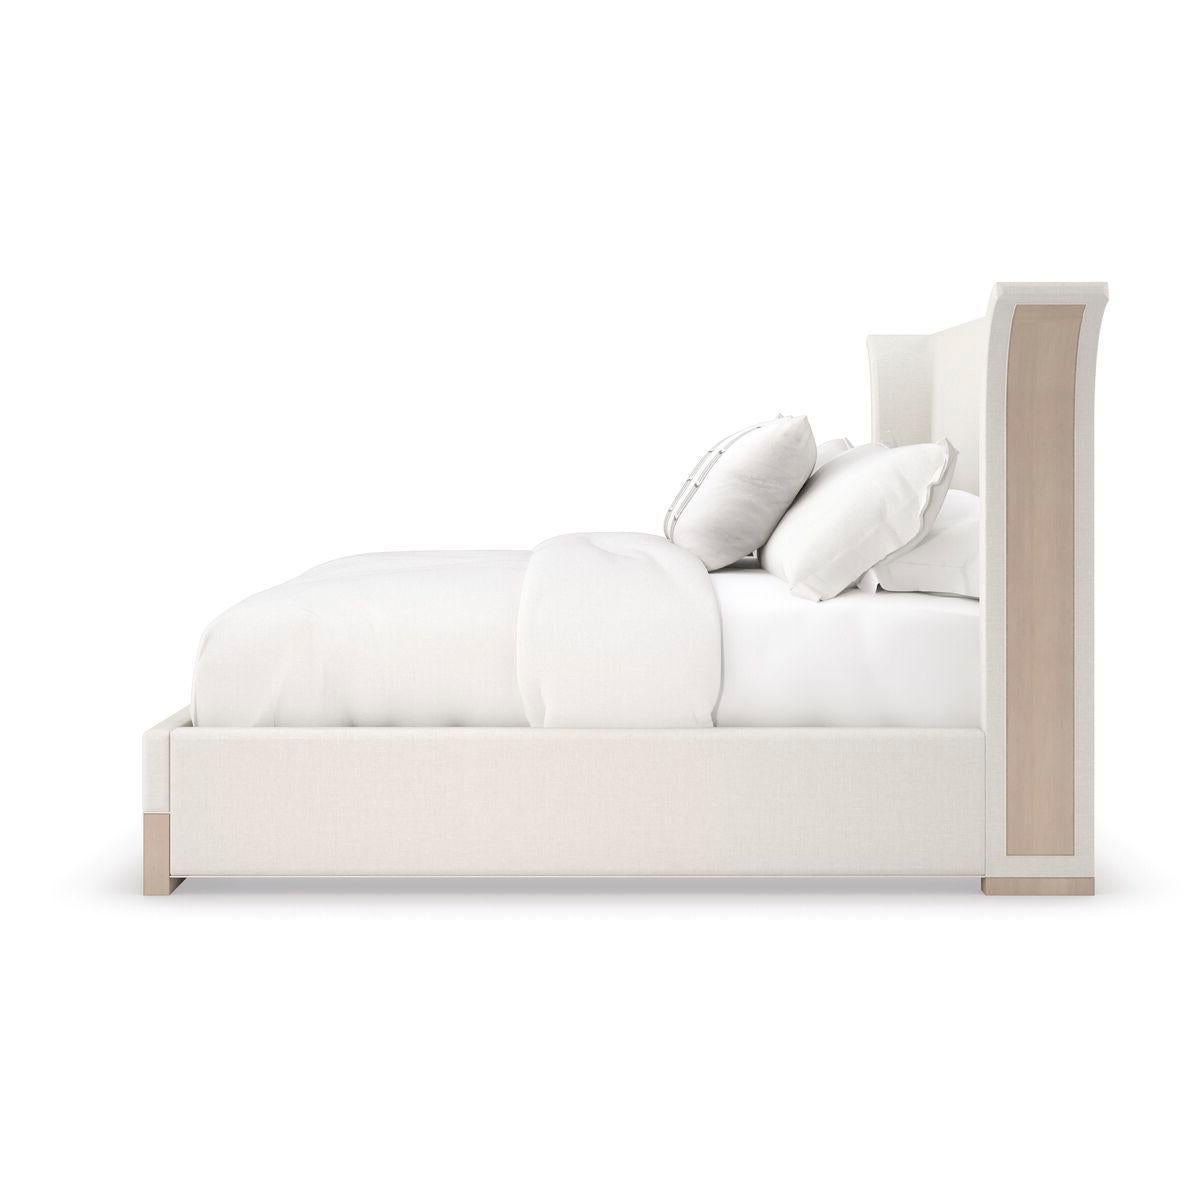 Asian Flared Modern Upholstered Bed - King For Sale